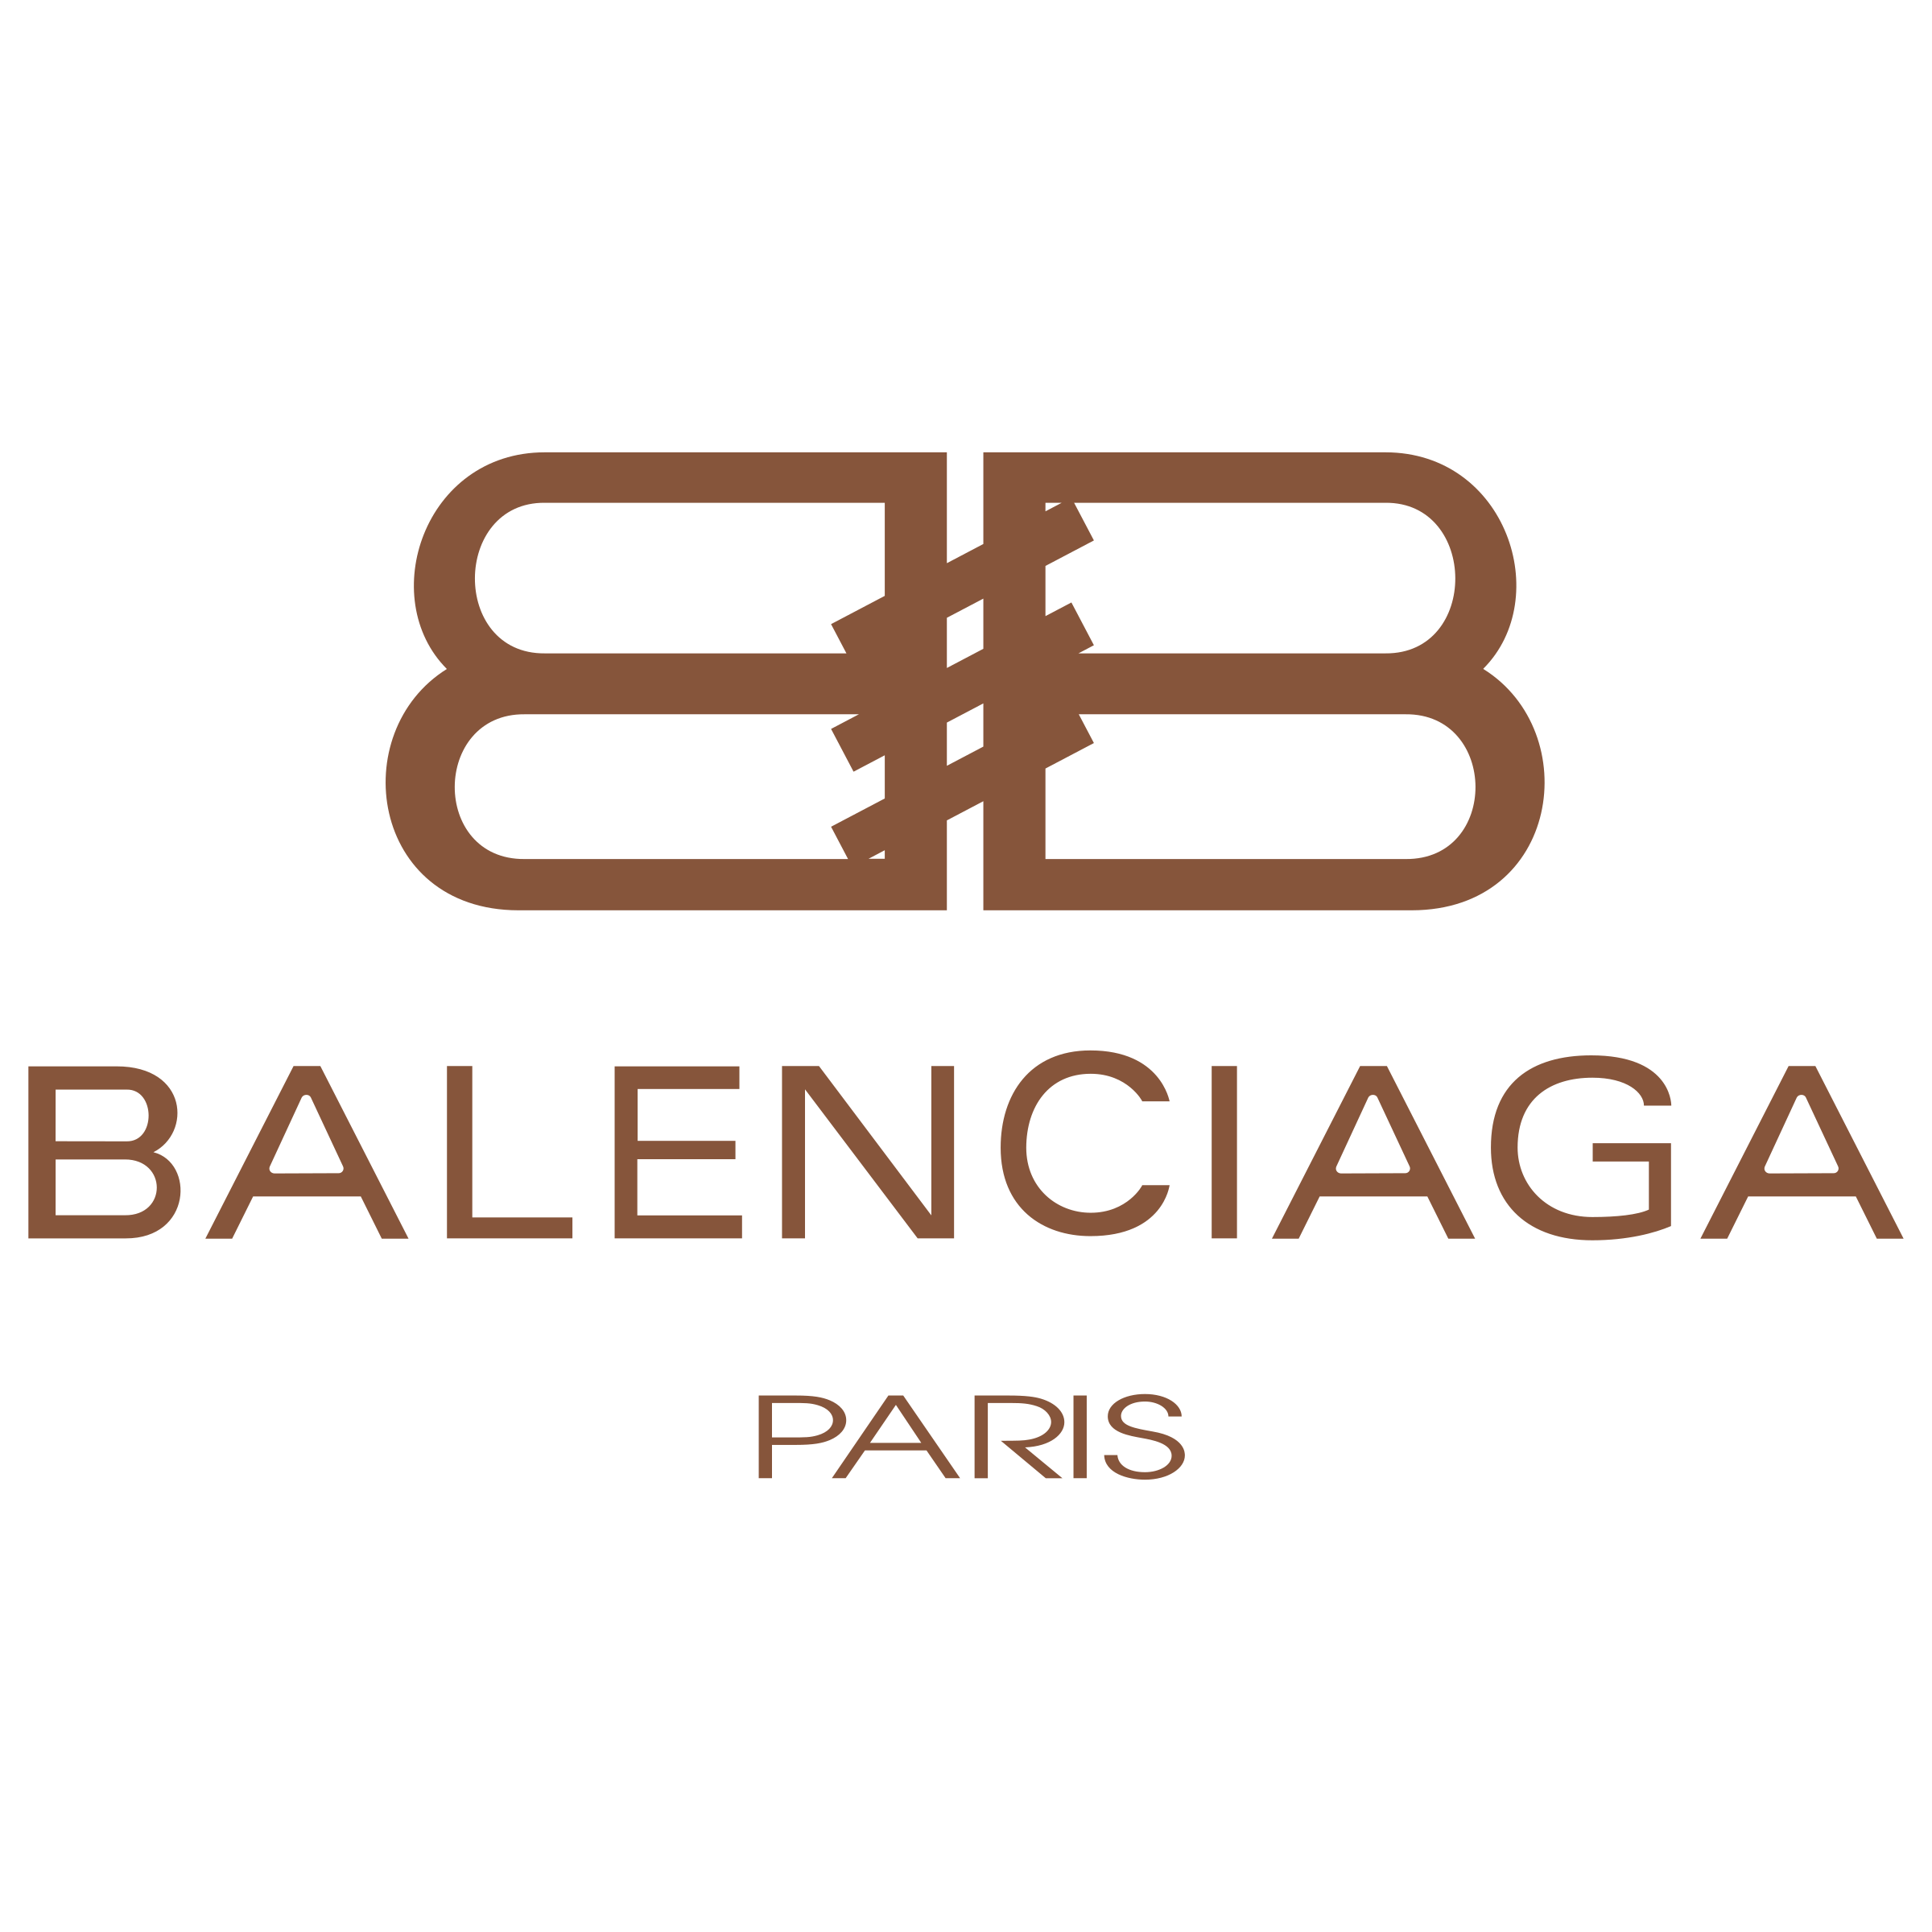 Balenciaga logo Images Transparentes